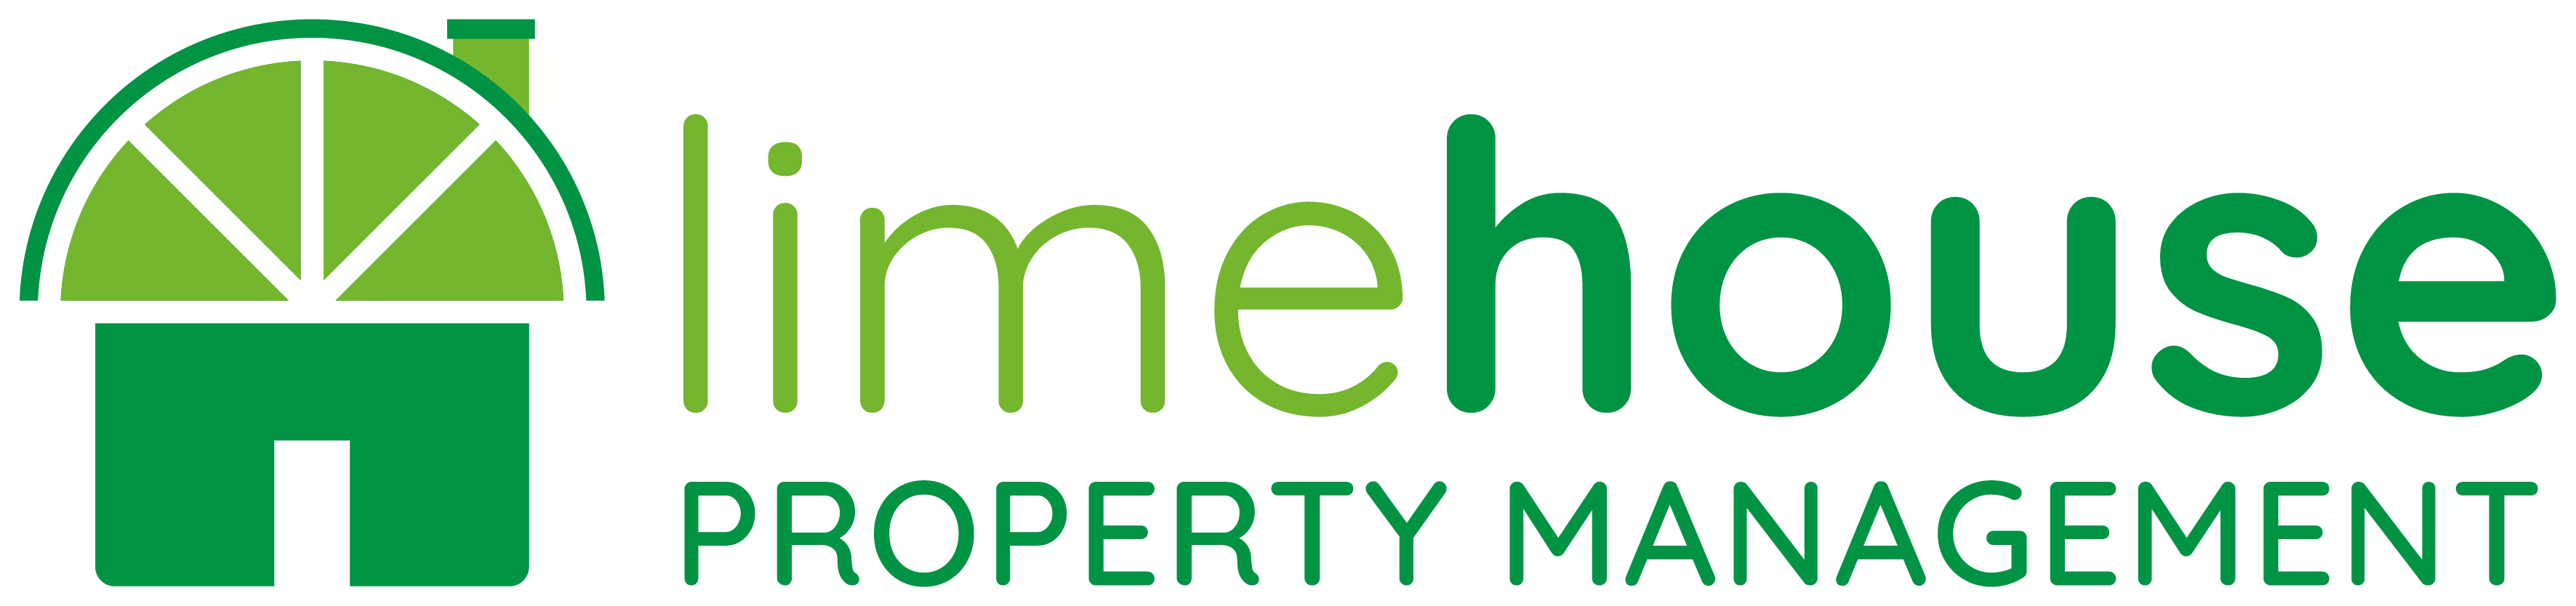 Limehouse Property Management